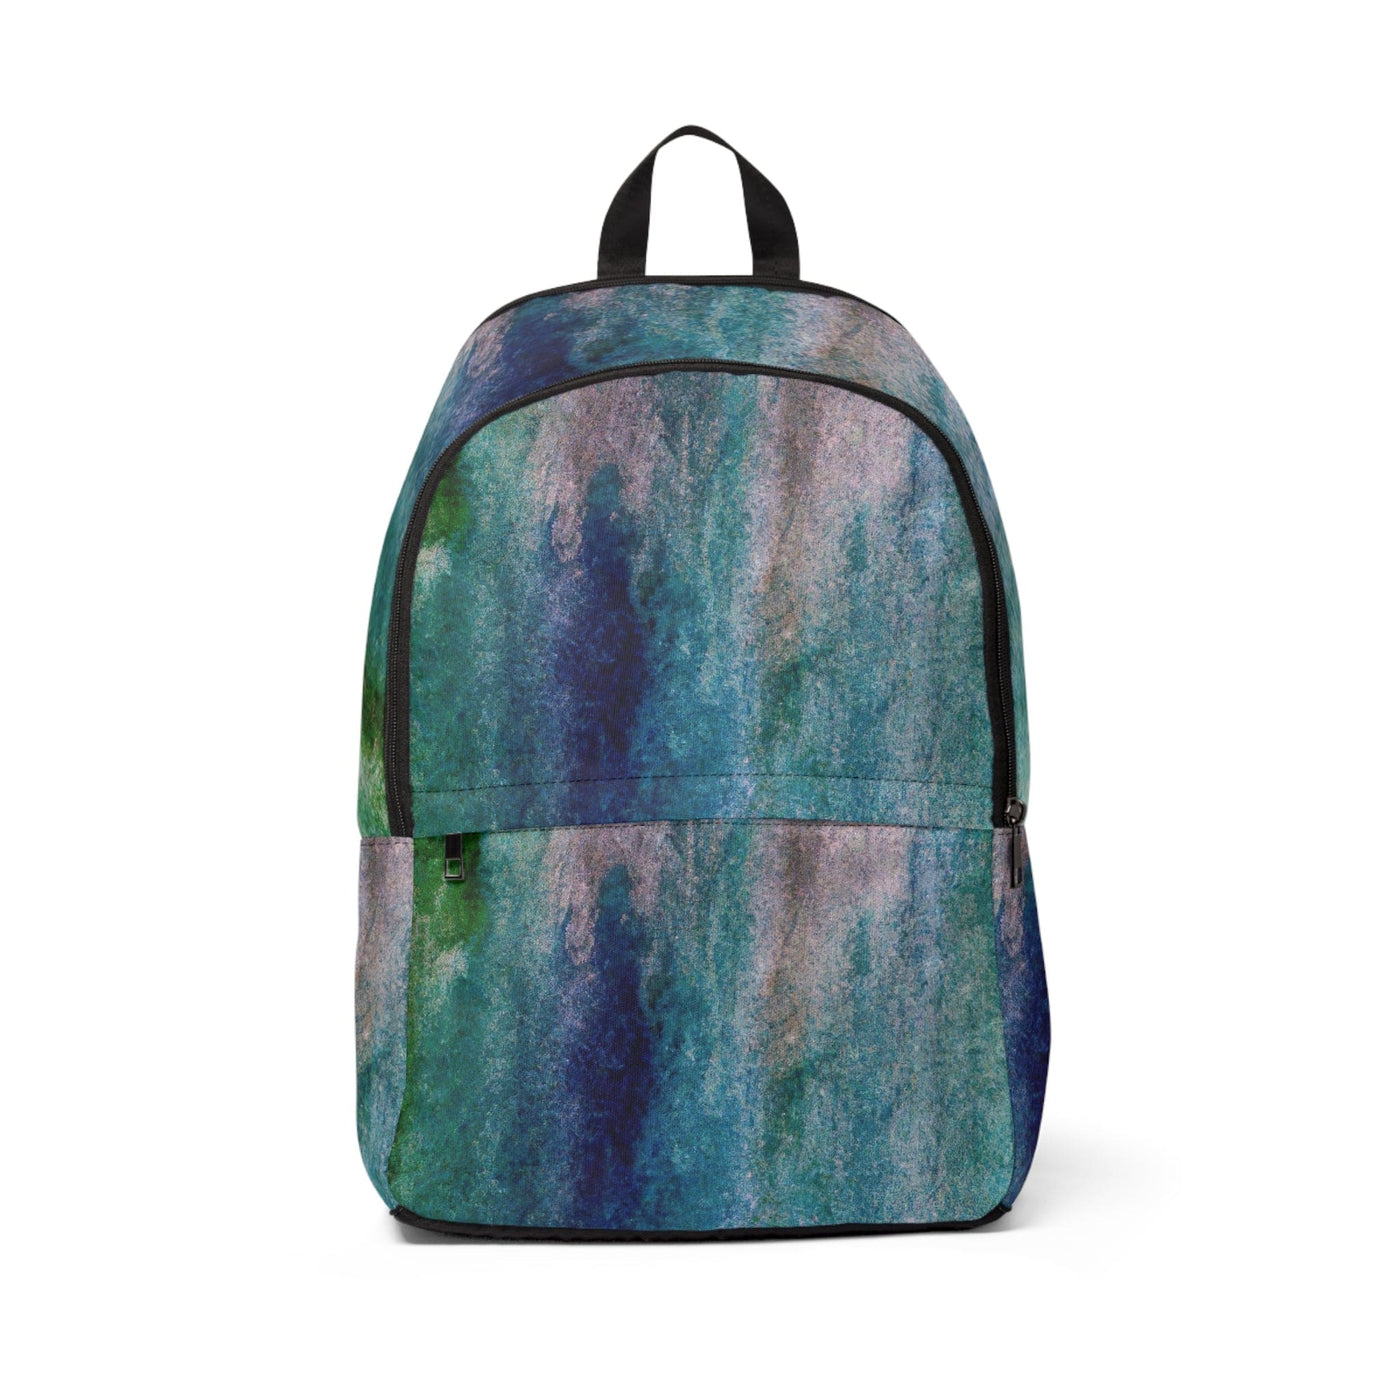 Fashion Backpack Waterproof Blue Hue Watercolor Abstract Print - Bags